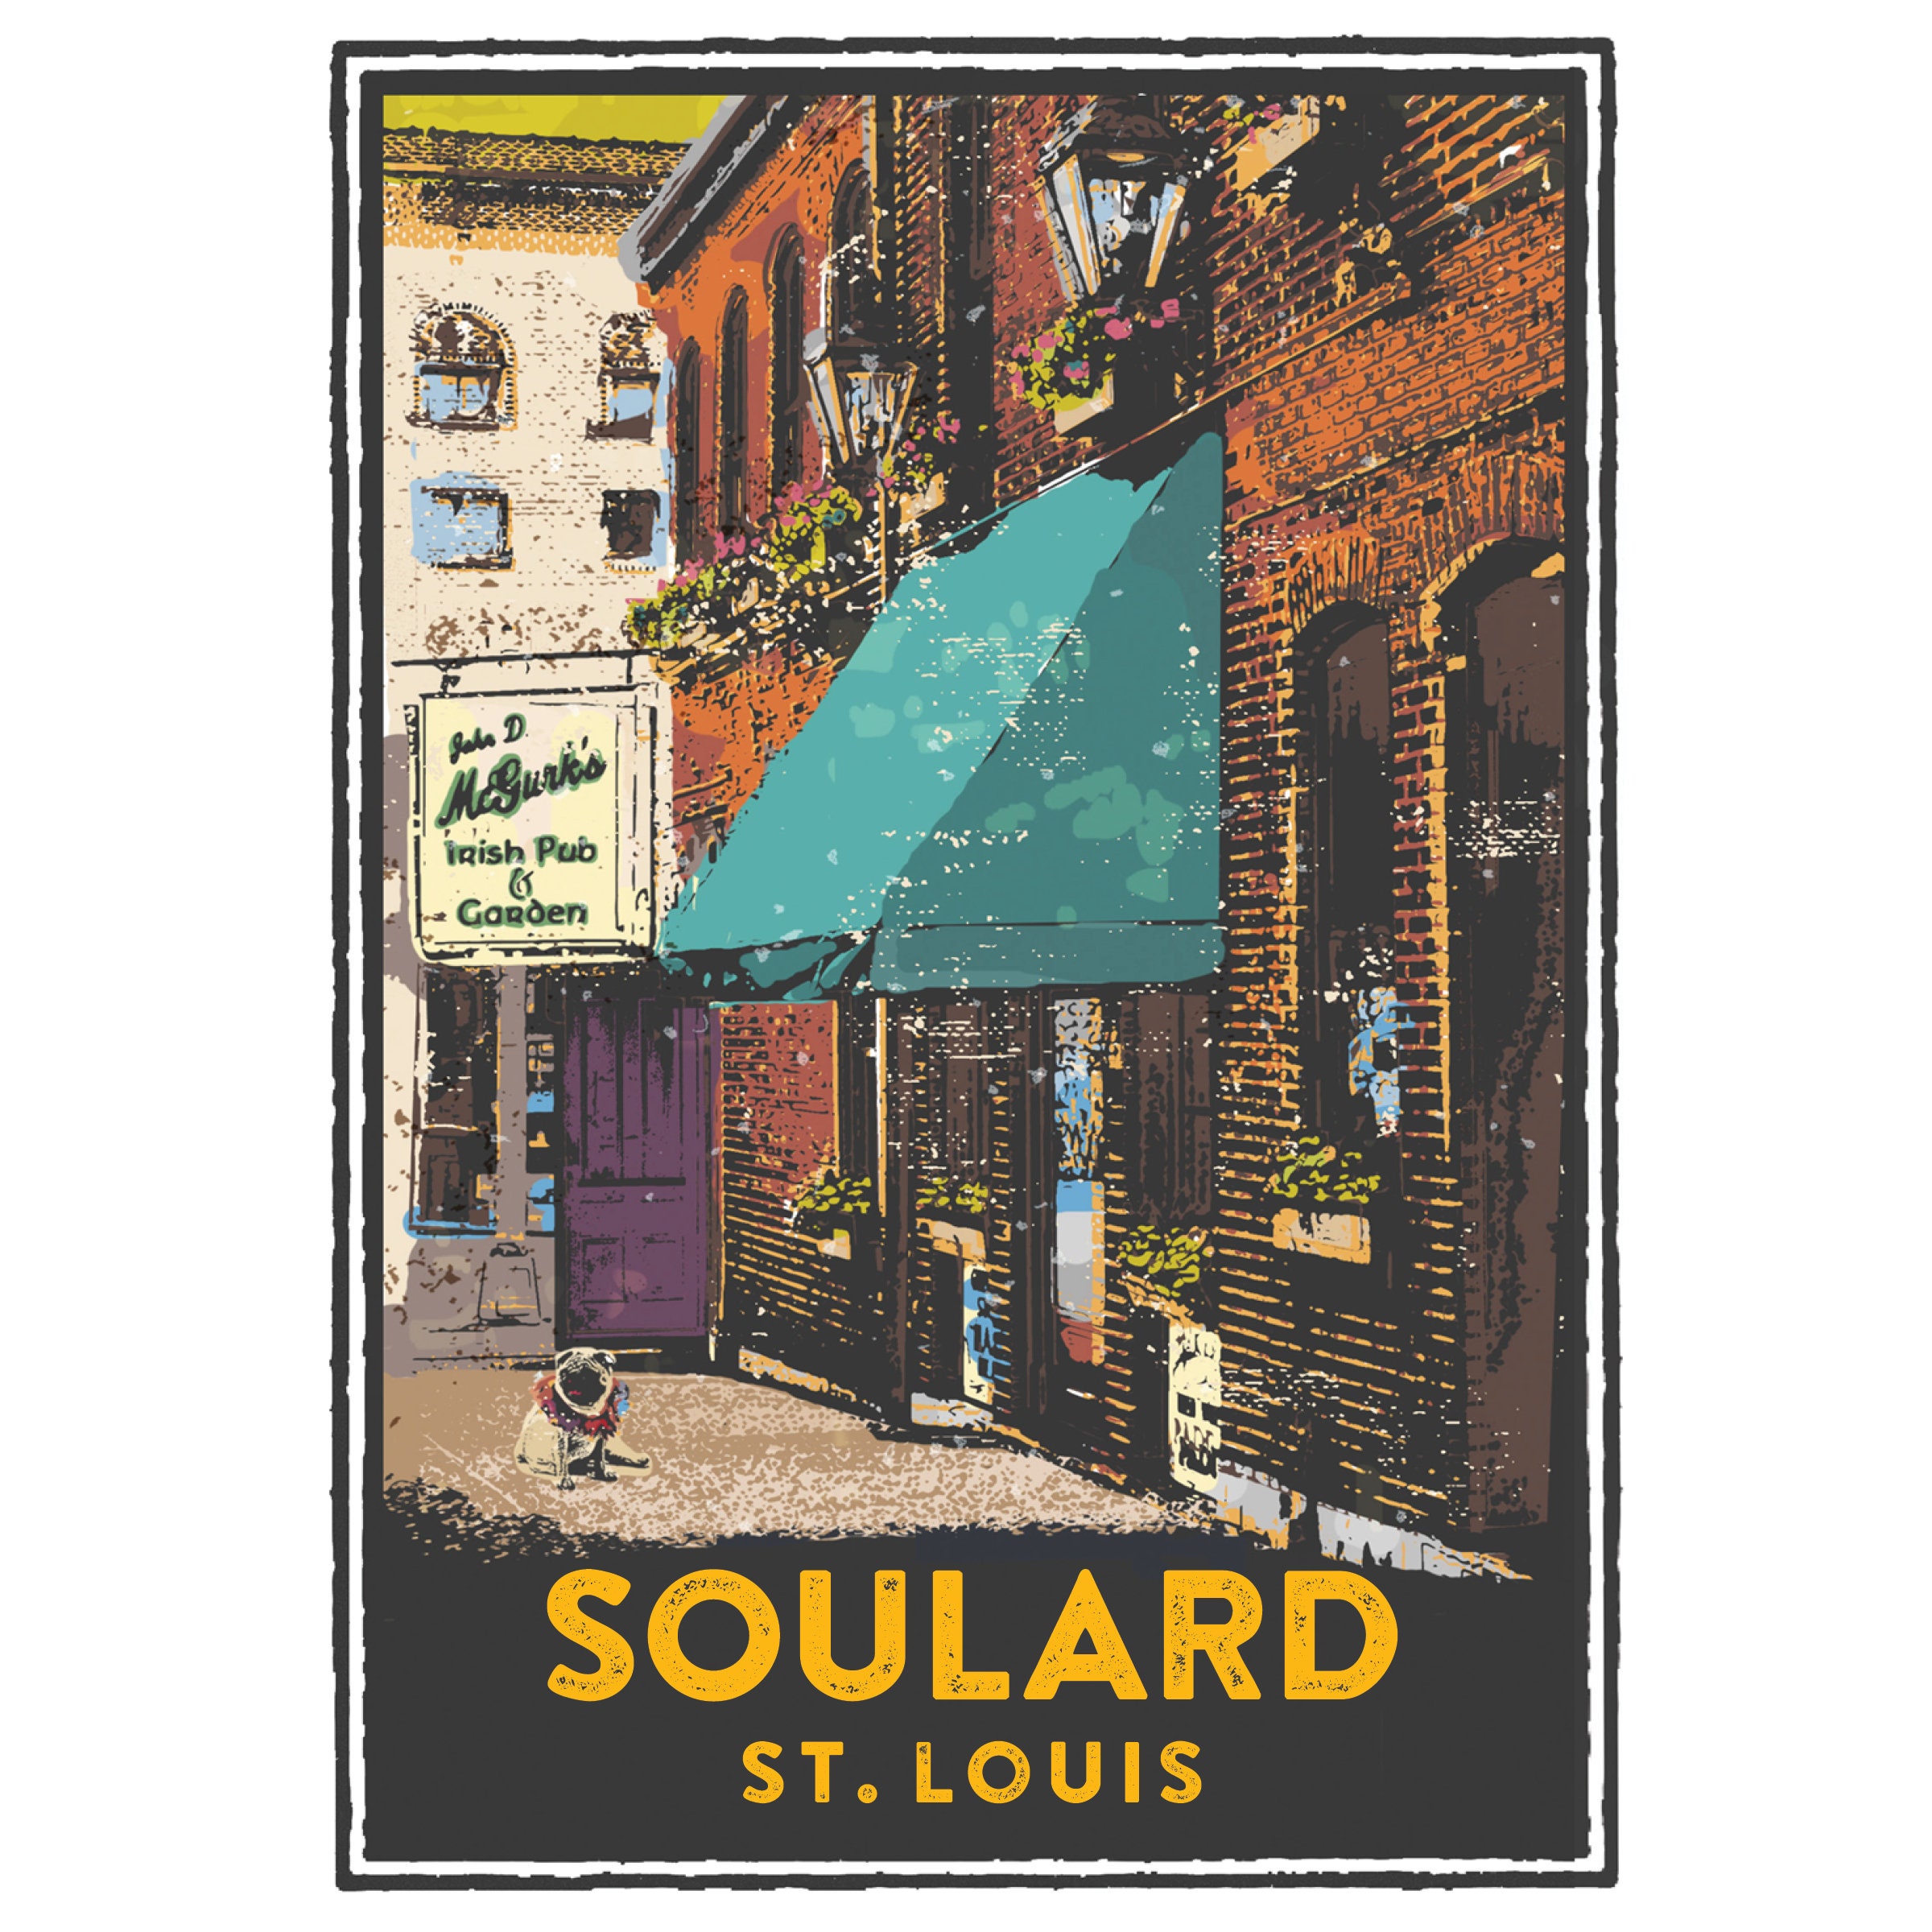 St. Louis Key Chain – Hollis Leather